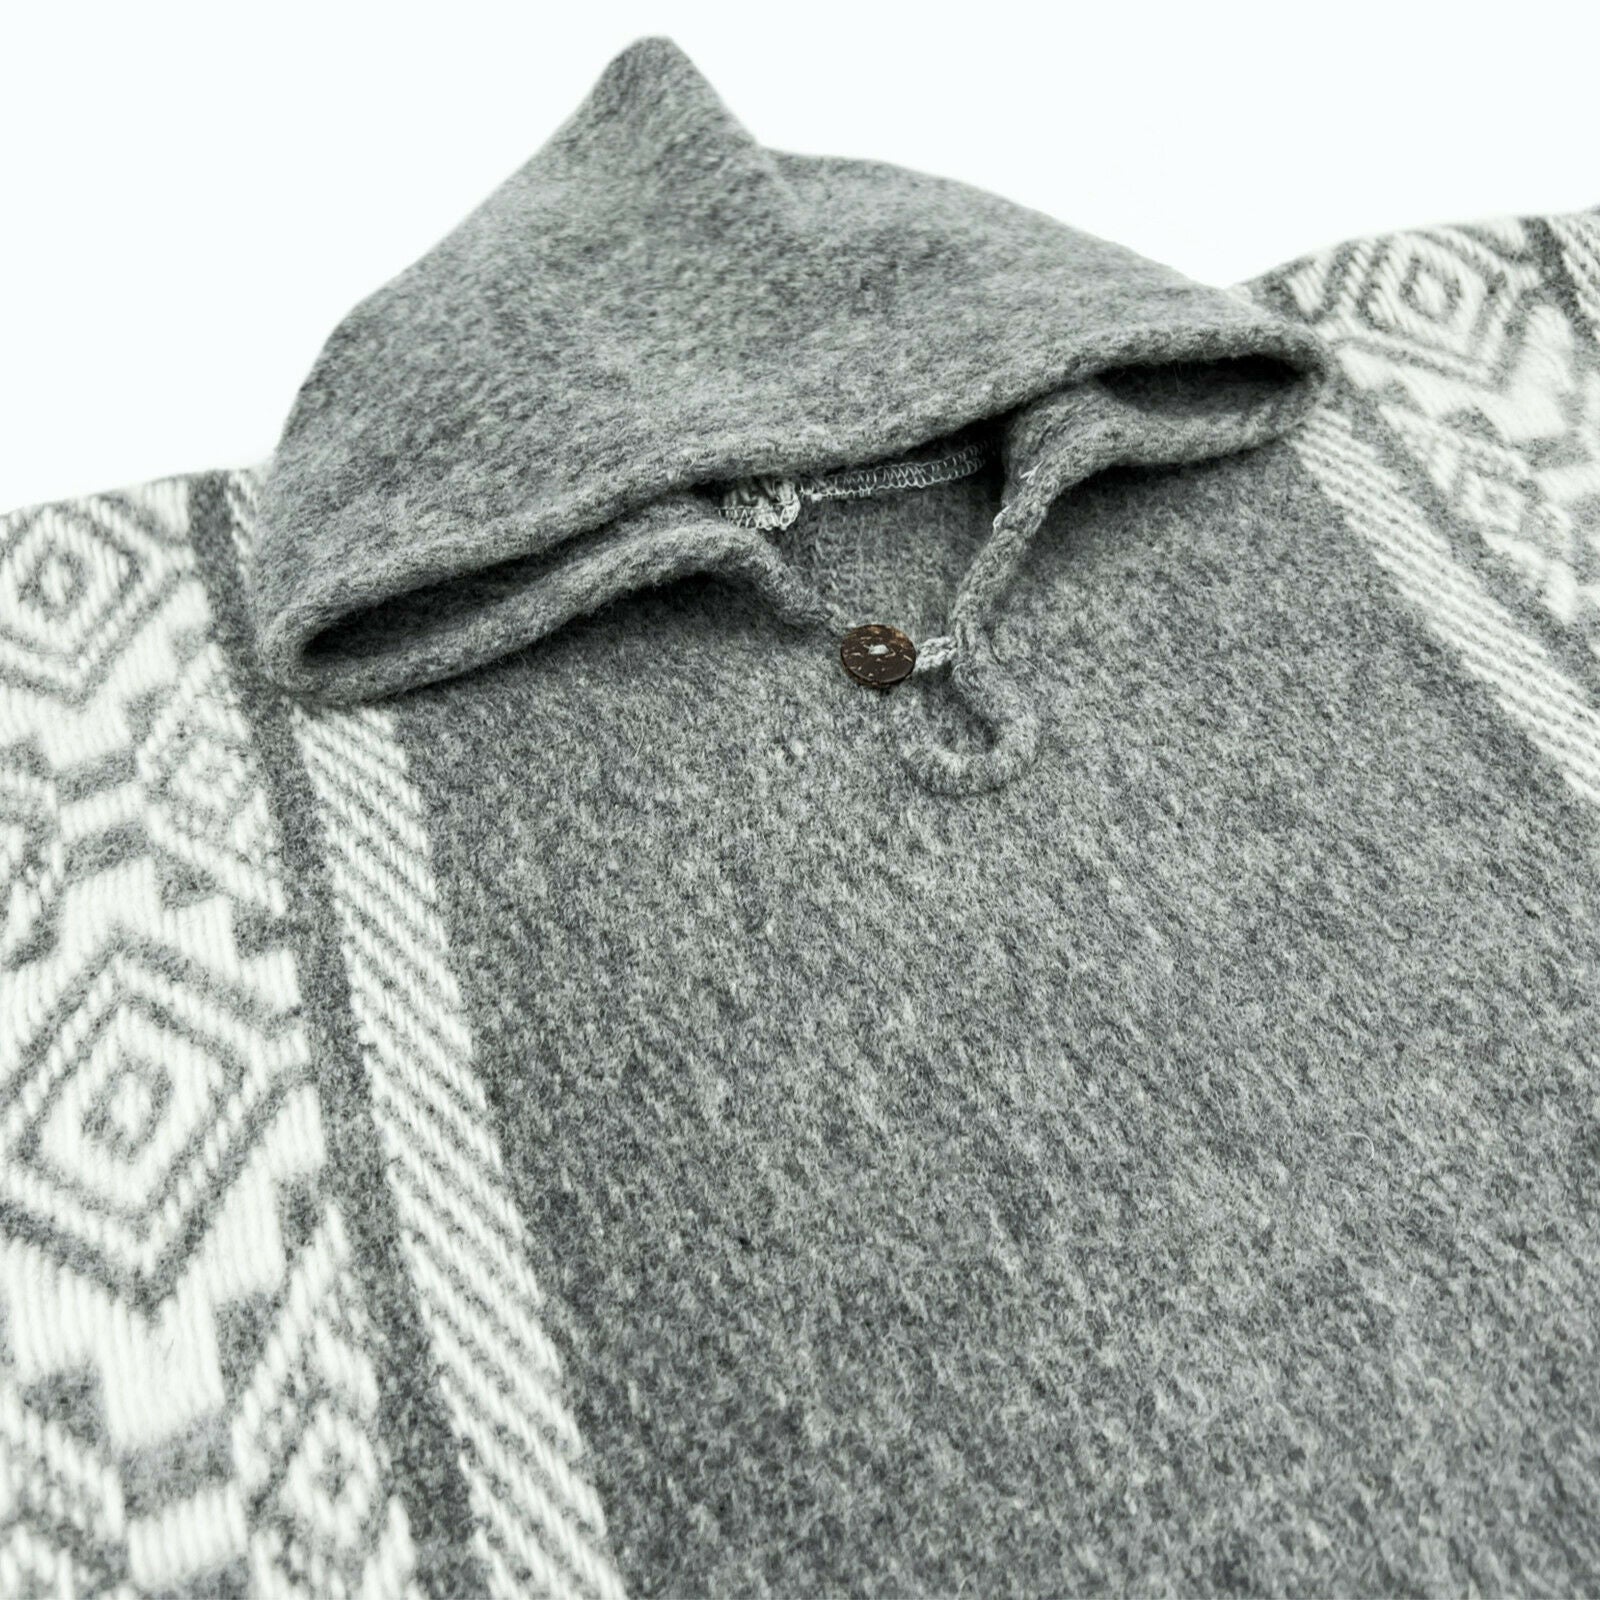 Yawi - Llama Wool Unisex South American Handwoven Hooded Poncho - gray with diamonds pattern